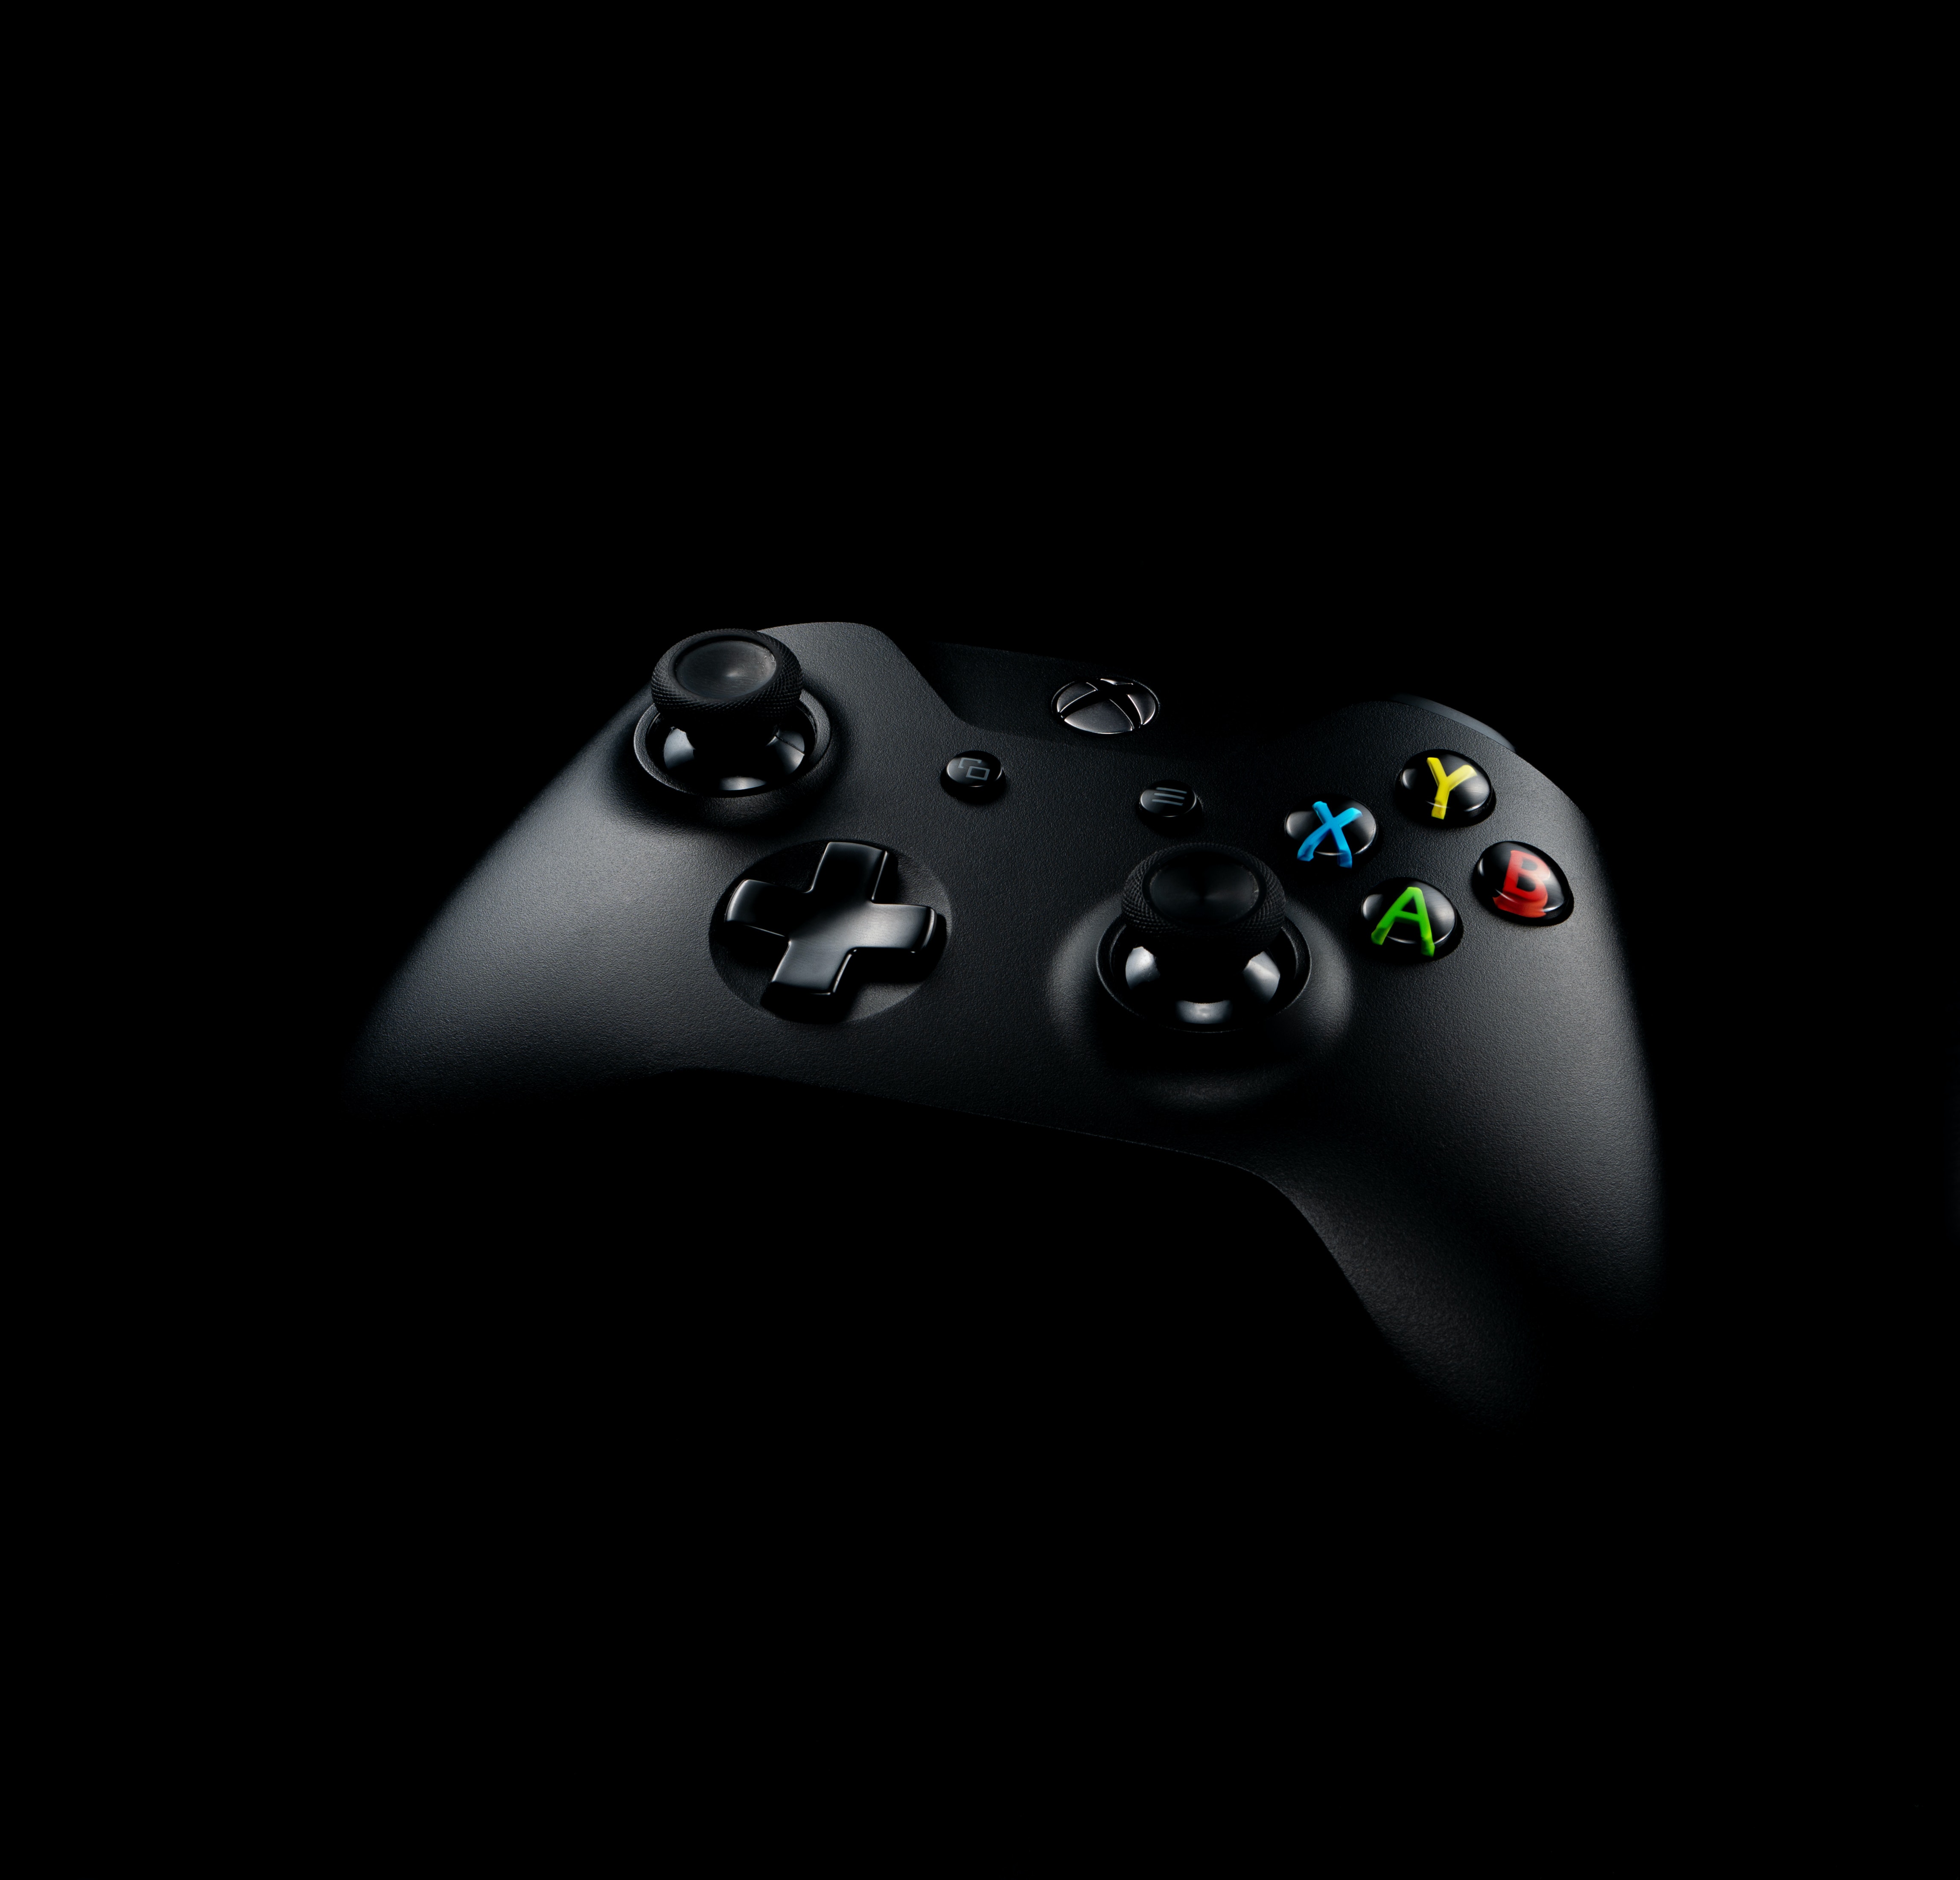 Black Xbox One Game Controller - Free Stock Photo.